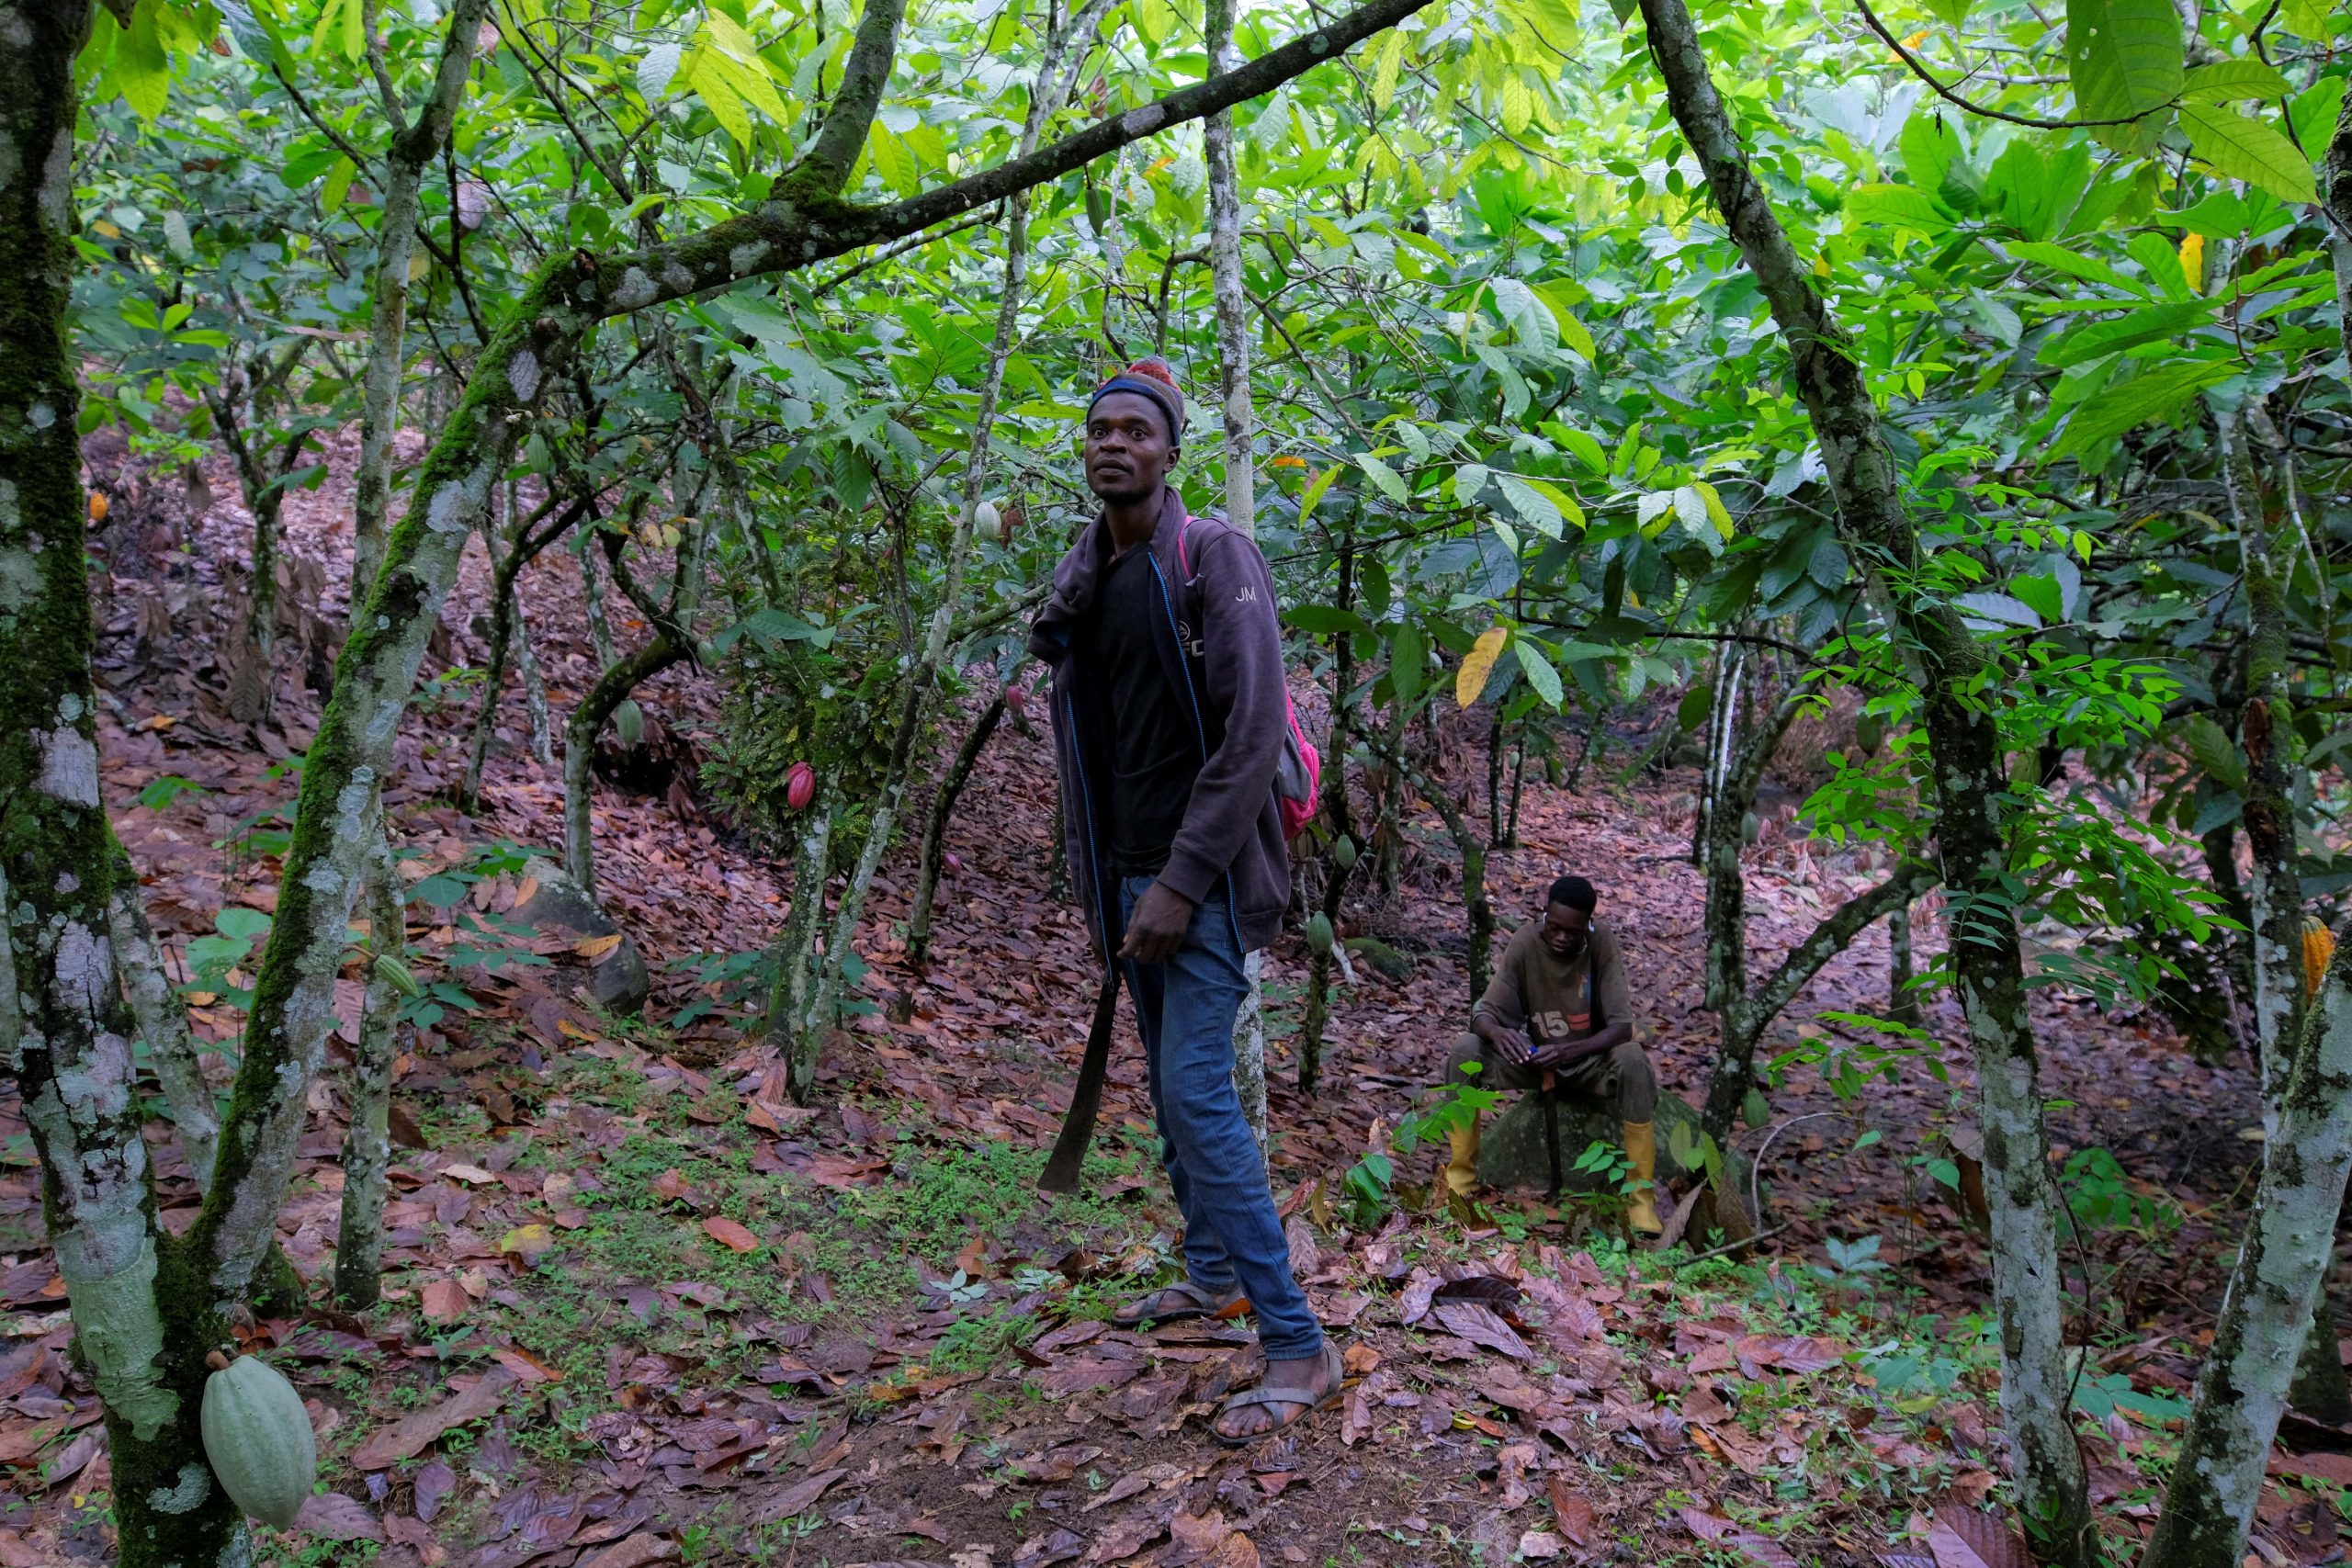 Boamah Sonkaa, a cocoa farmer, visits his cocoa farm near the village of Kusa, in the Ashanti region of Ghana, August 27, 2022.